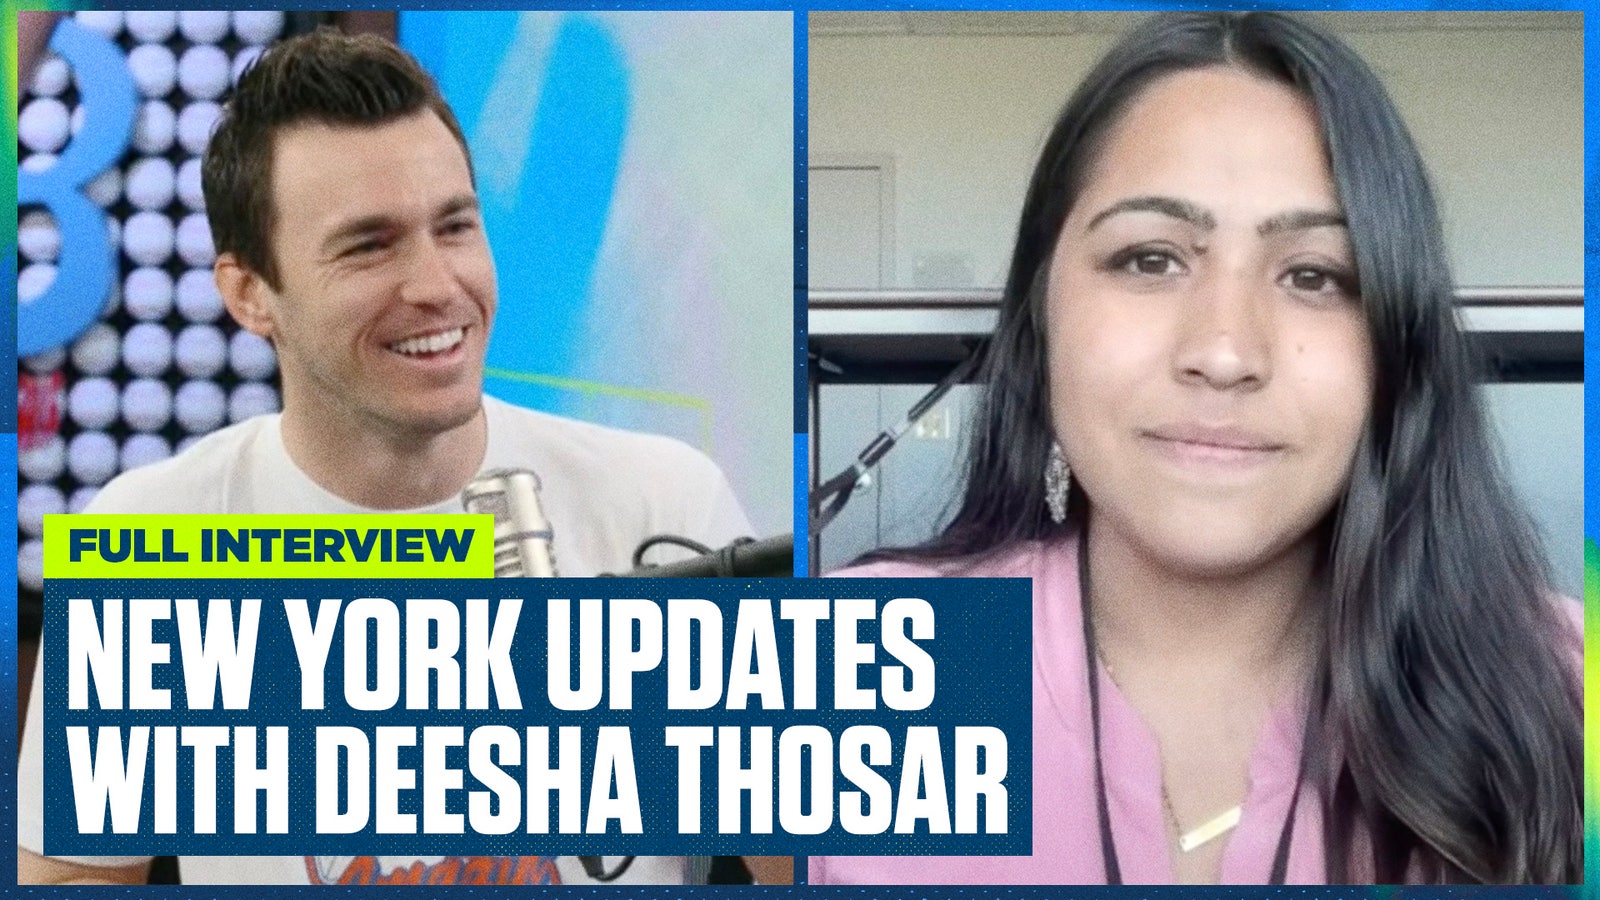 Spring training updates with Deesha Thosar